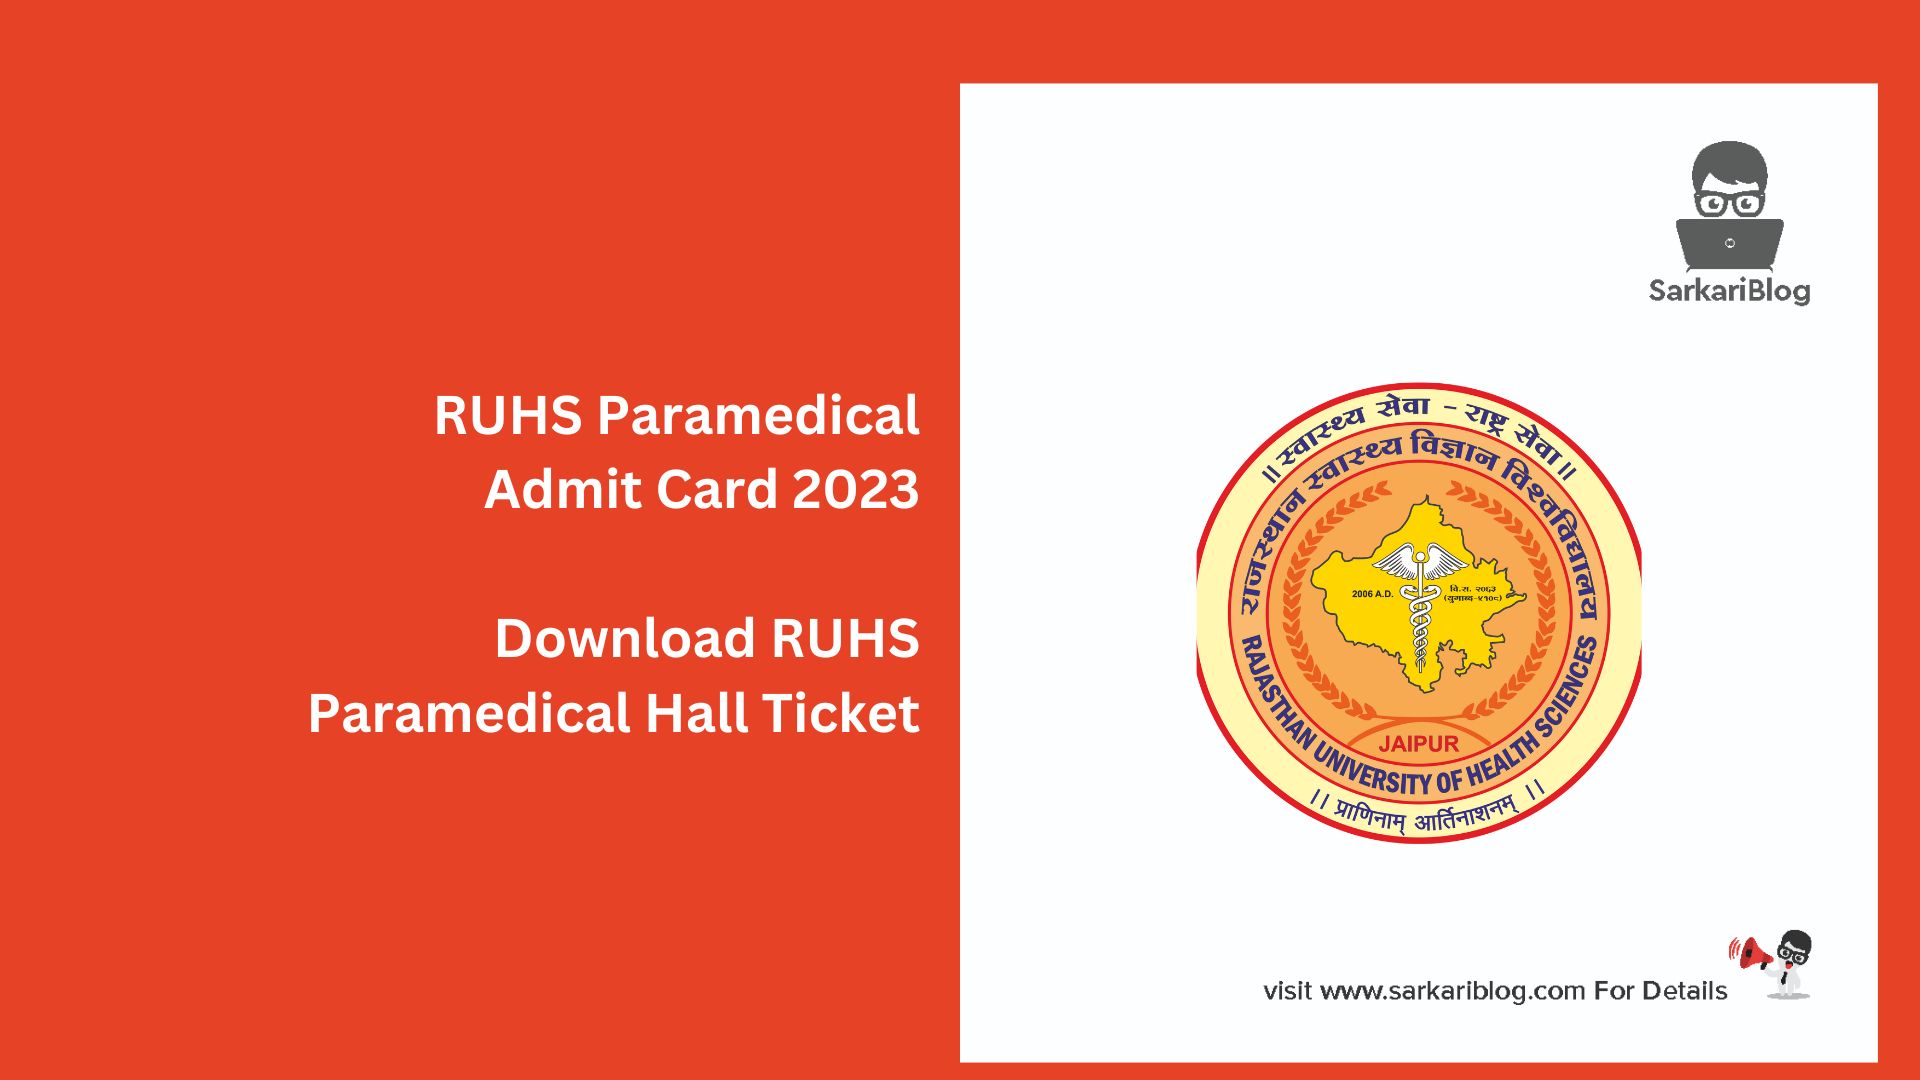 RUHS Paramedical Admit Card 2023